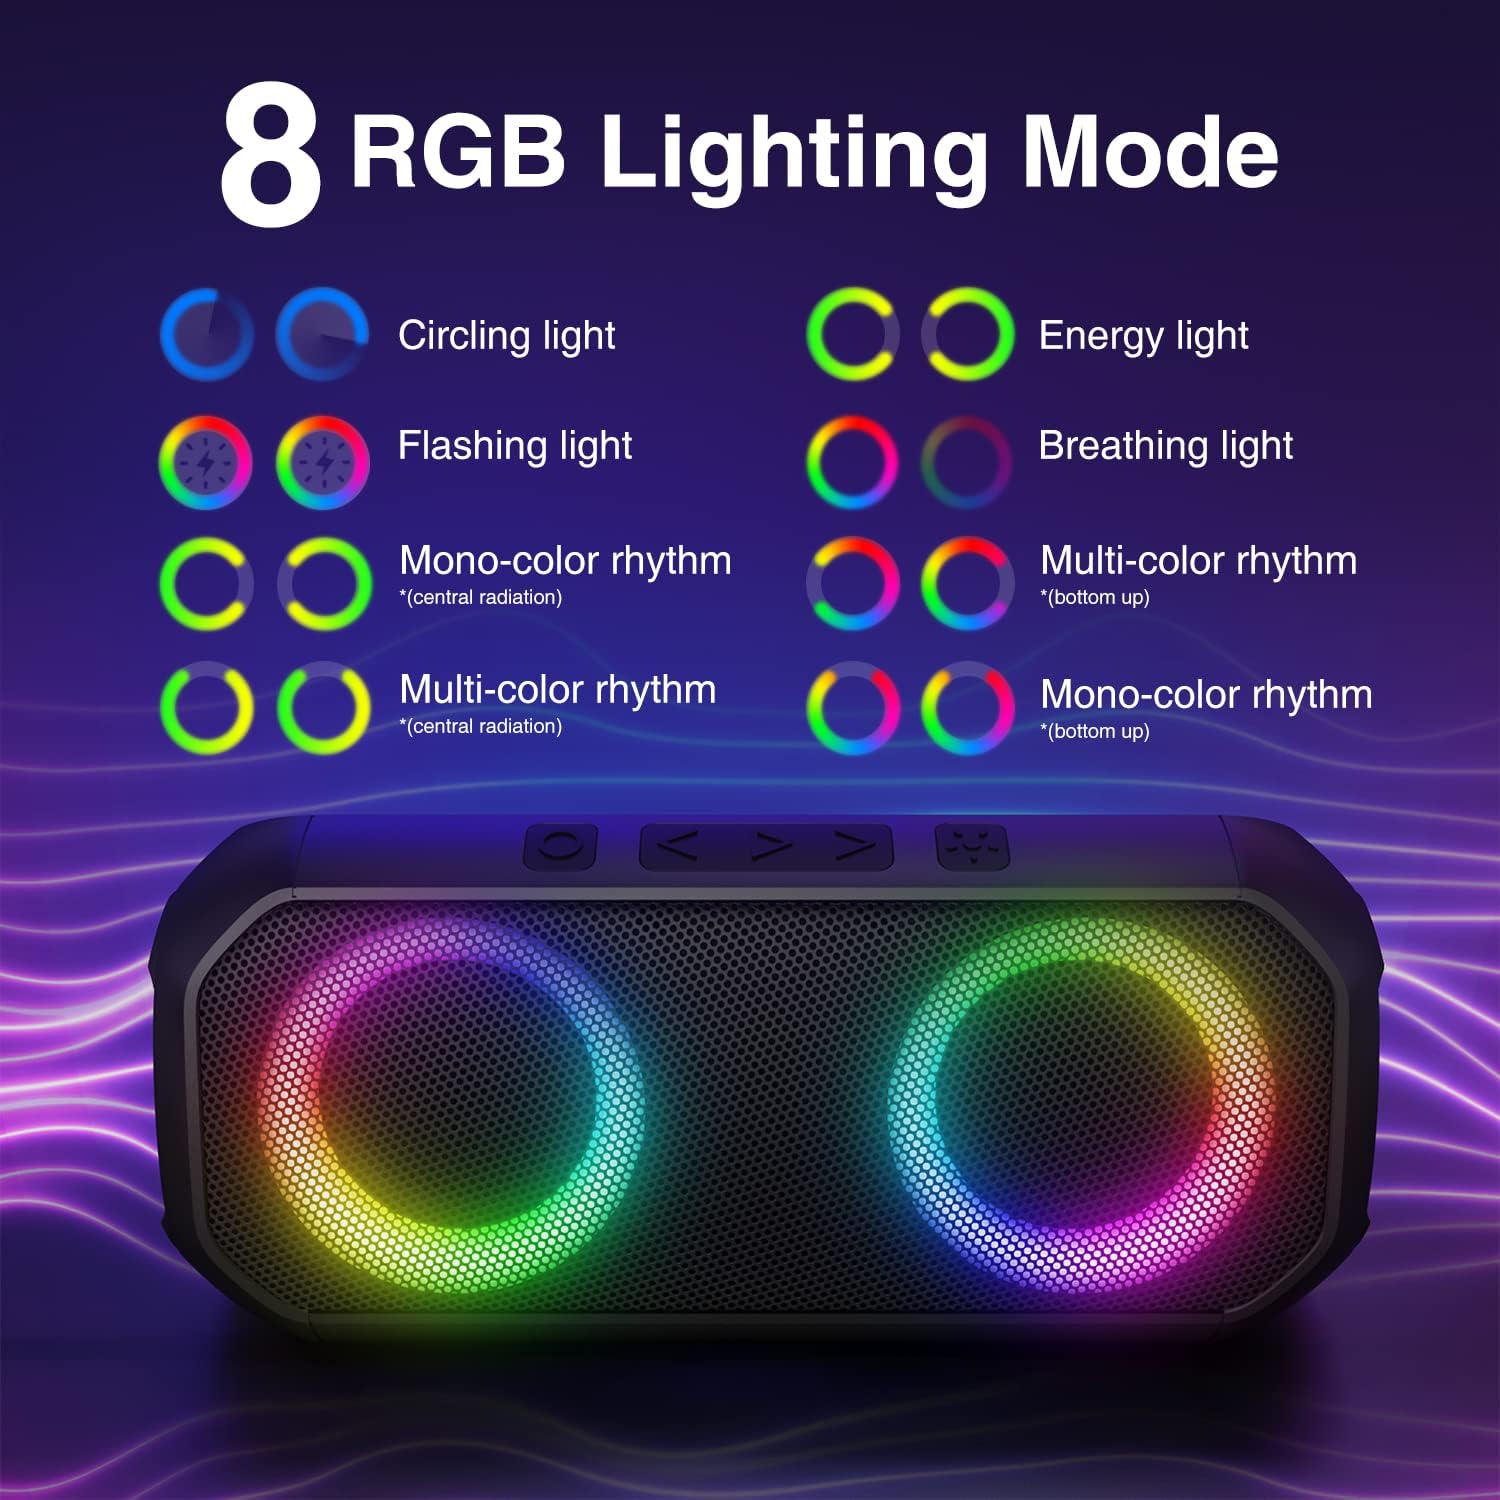 Bluetooth Speakers Blod Bass Dynamic RGB Portable Wireless Speaker with 24W